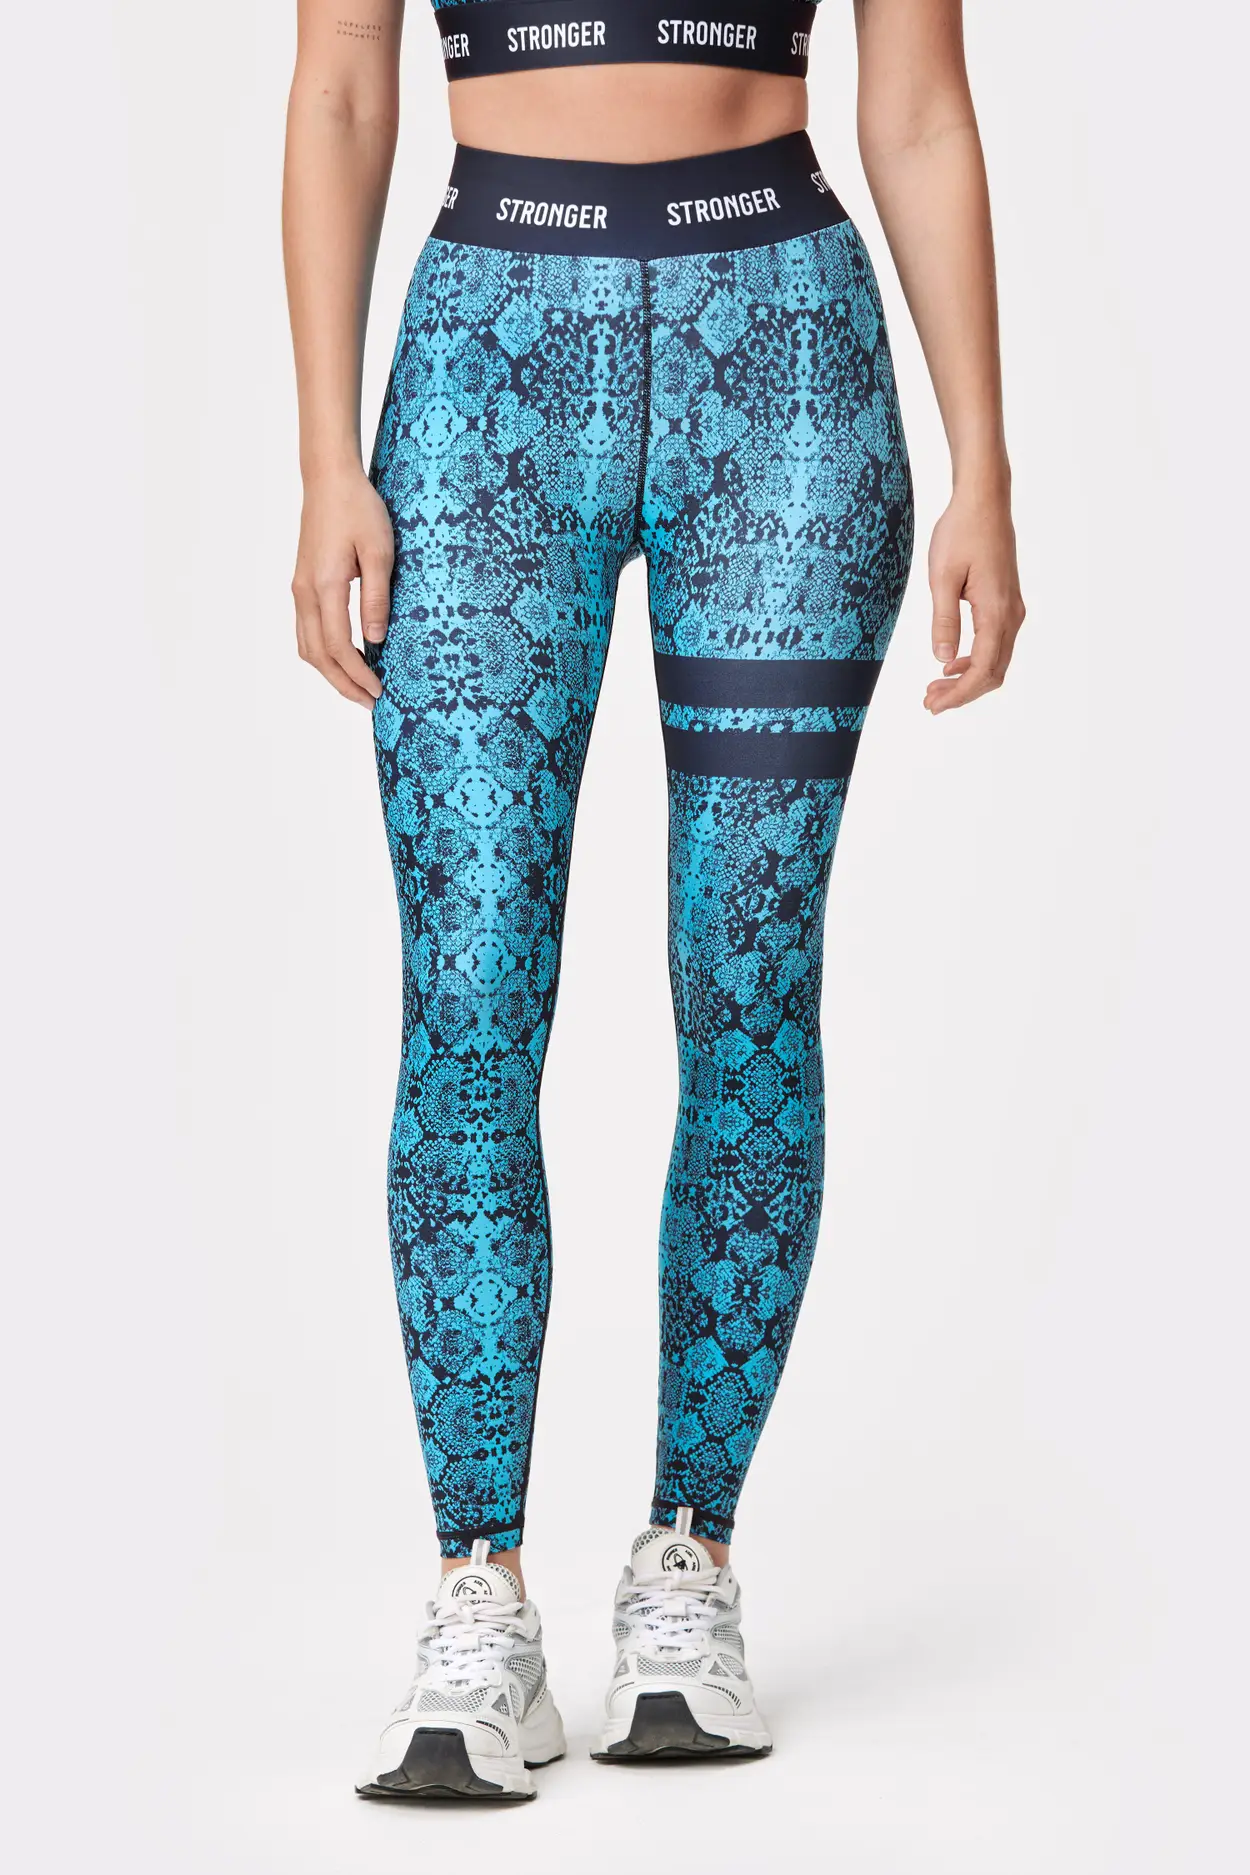 Women’s Gymshark Dry Fit Flex Leggings Teal Ice Blue Color Size XS